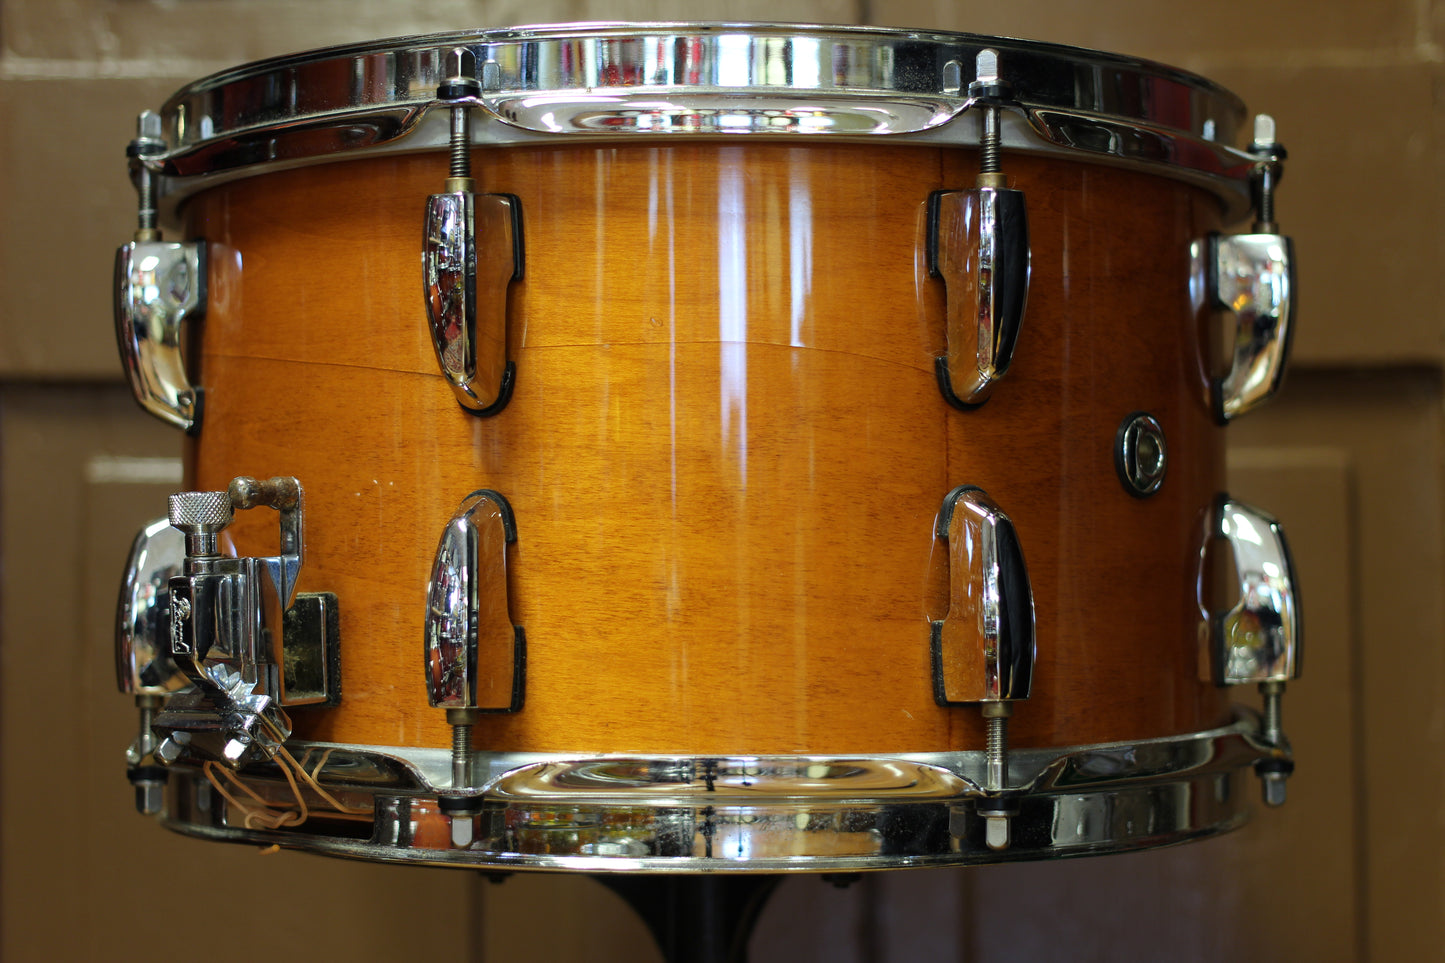 Used - Pearl Maple Shell 7"x12" Soprano Snare in Liquid Amber